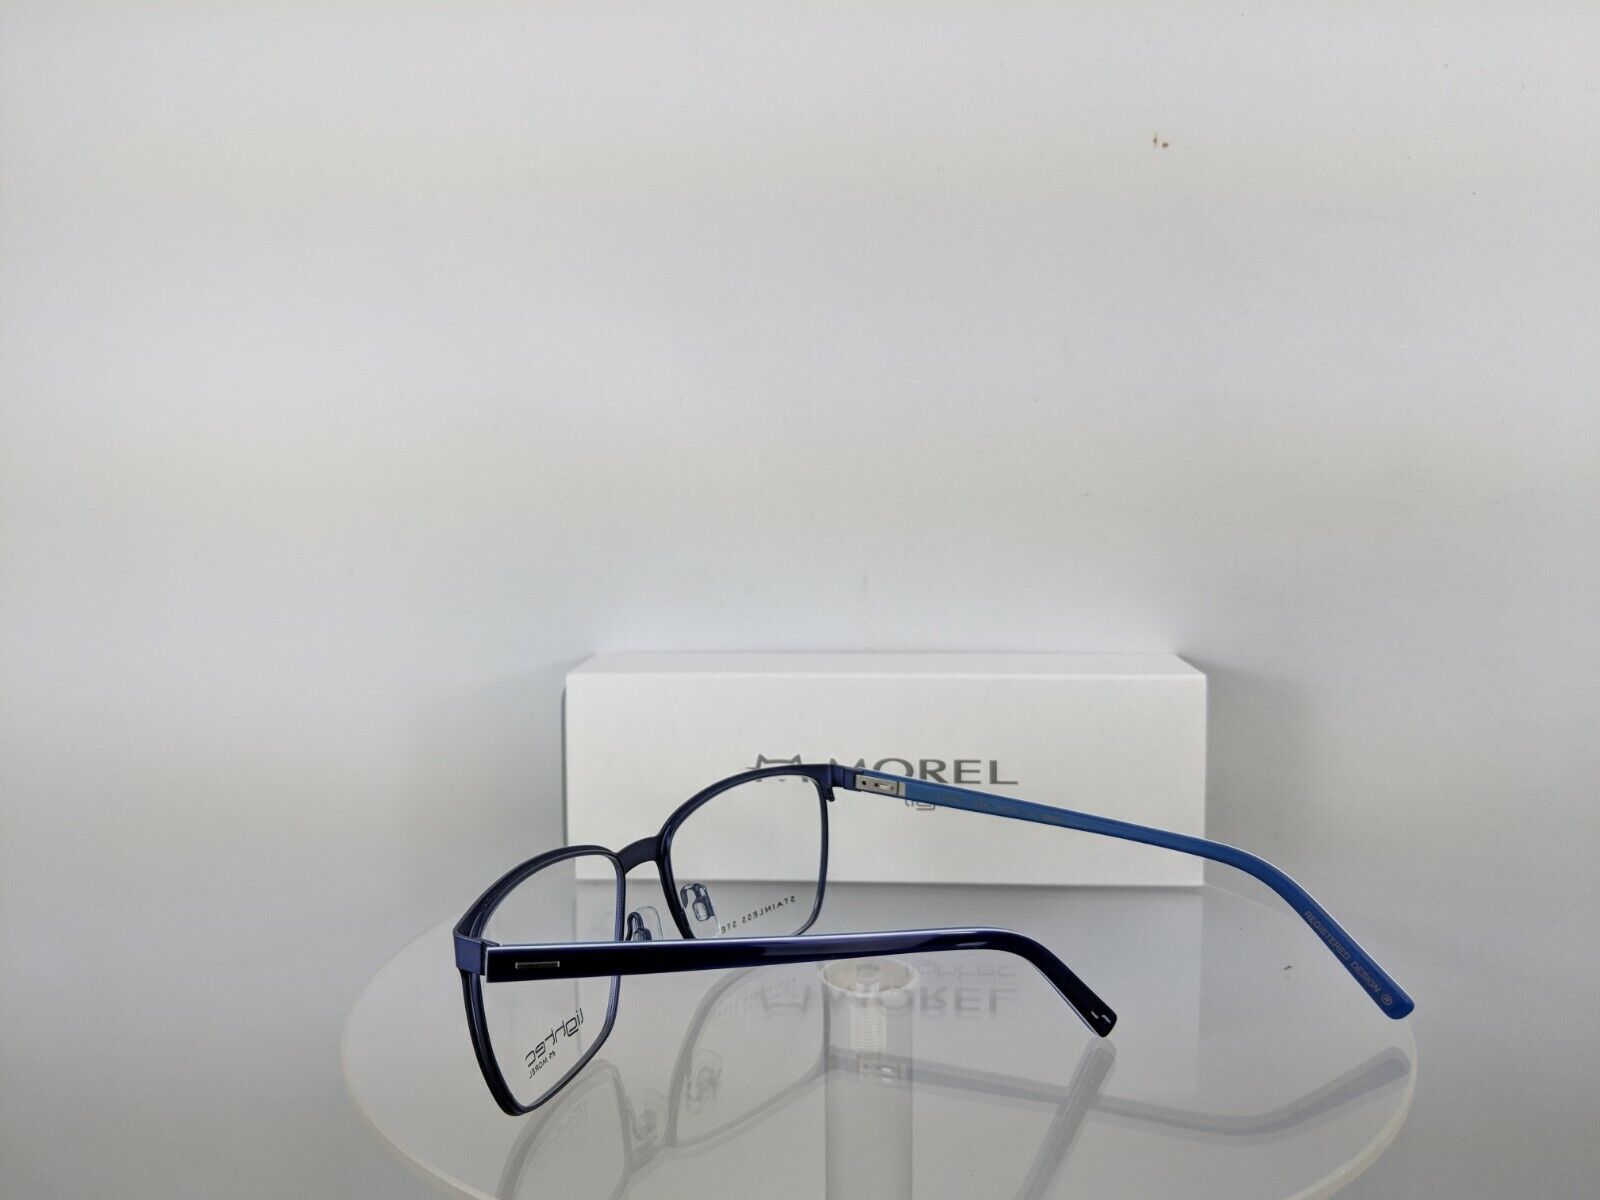 Brand New Authentic Lightec Eyeglasses 8106 L Bb032 Morel Blue Frame